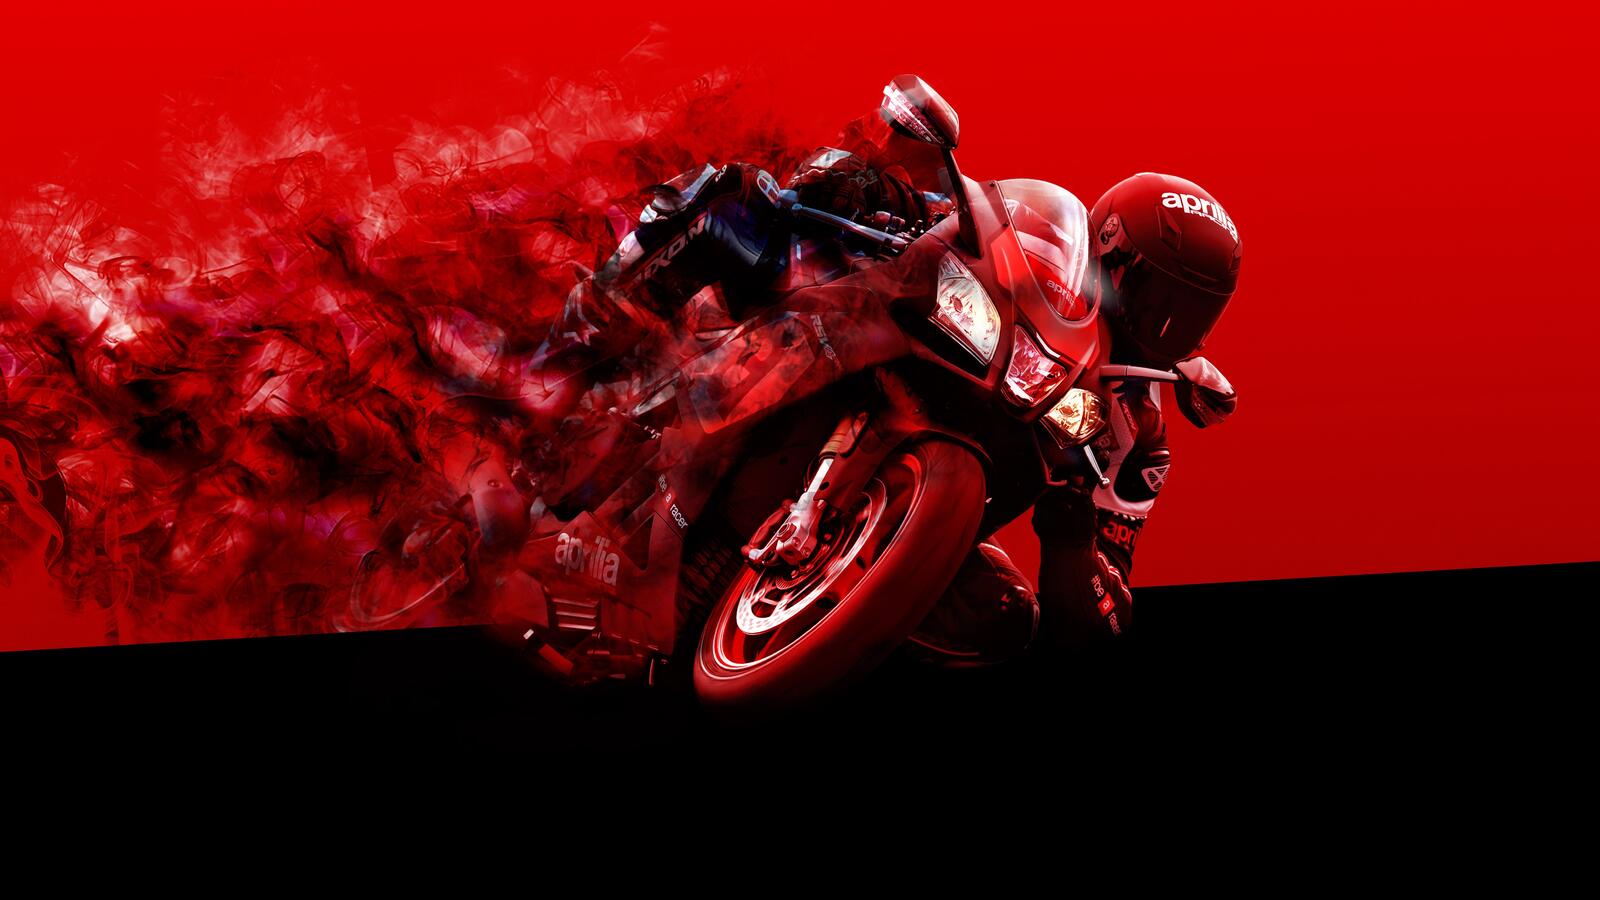 Free photo Biker on a sports bike on a red background